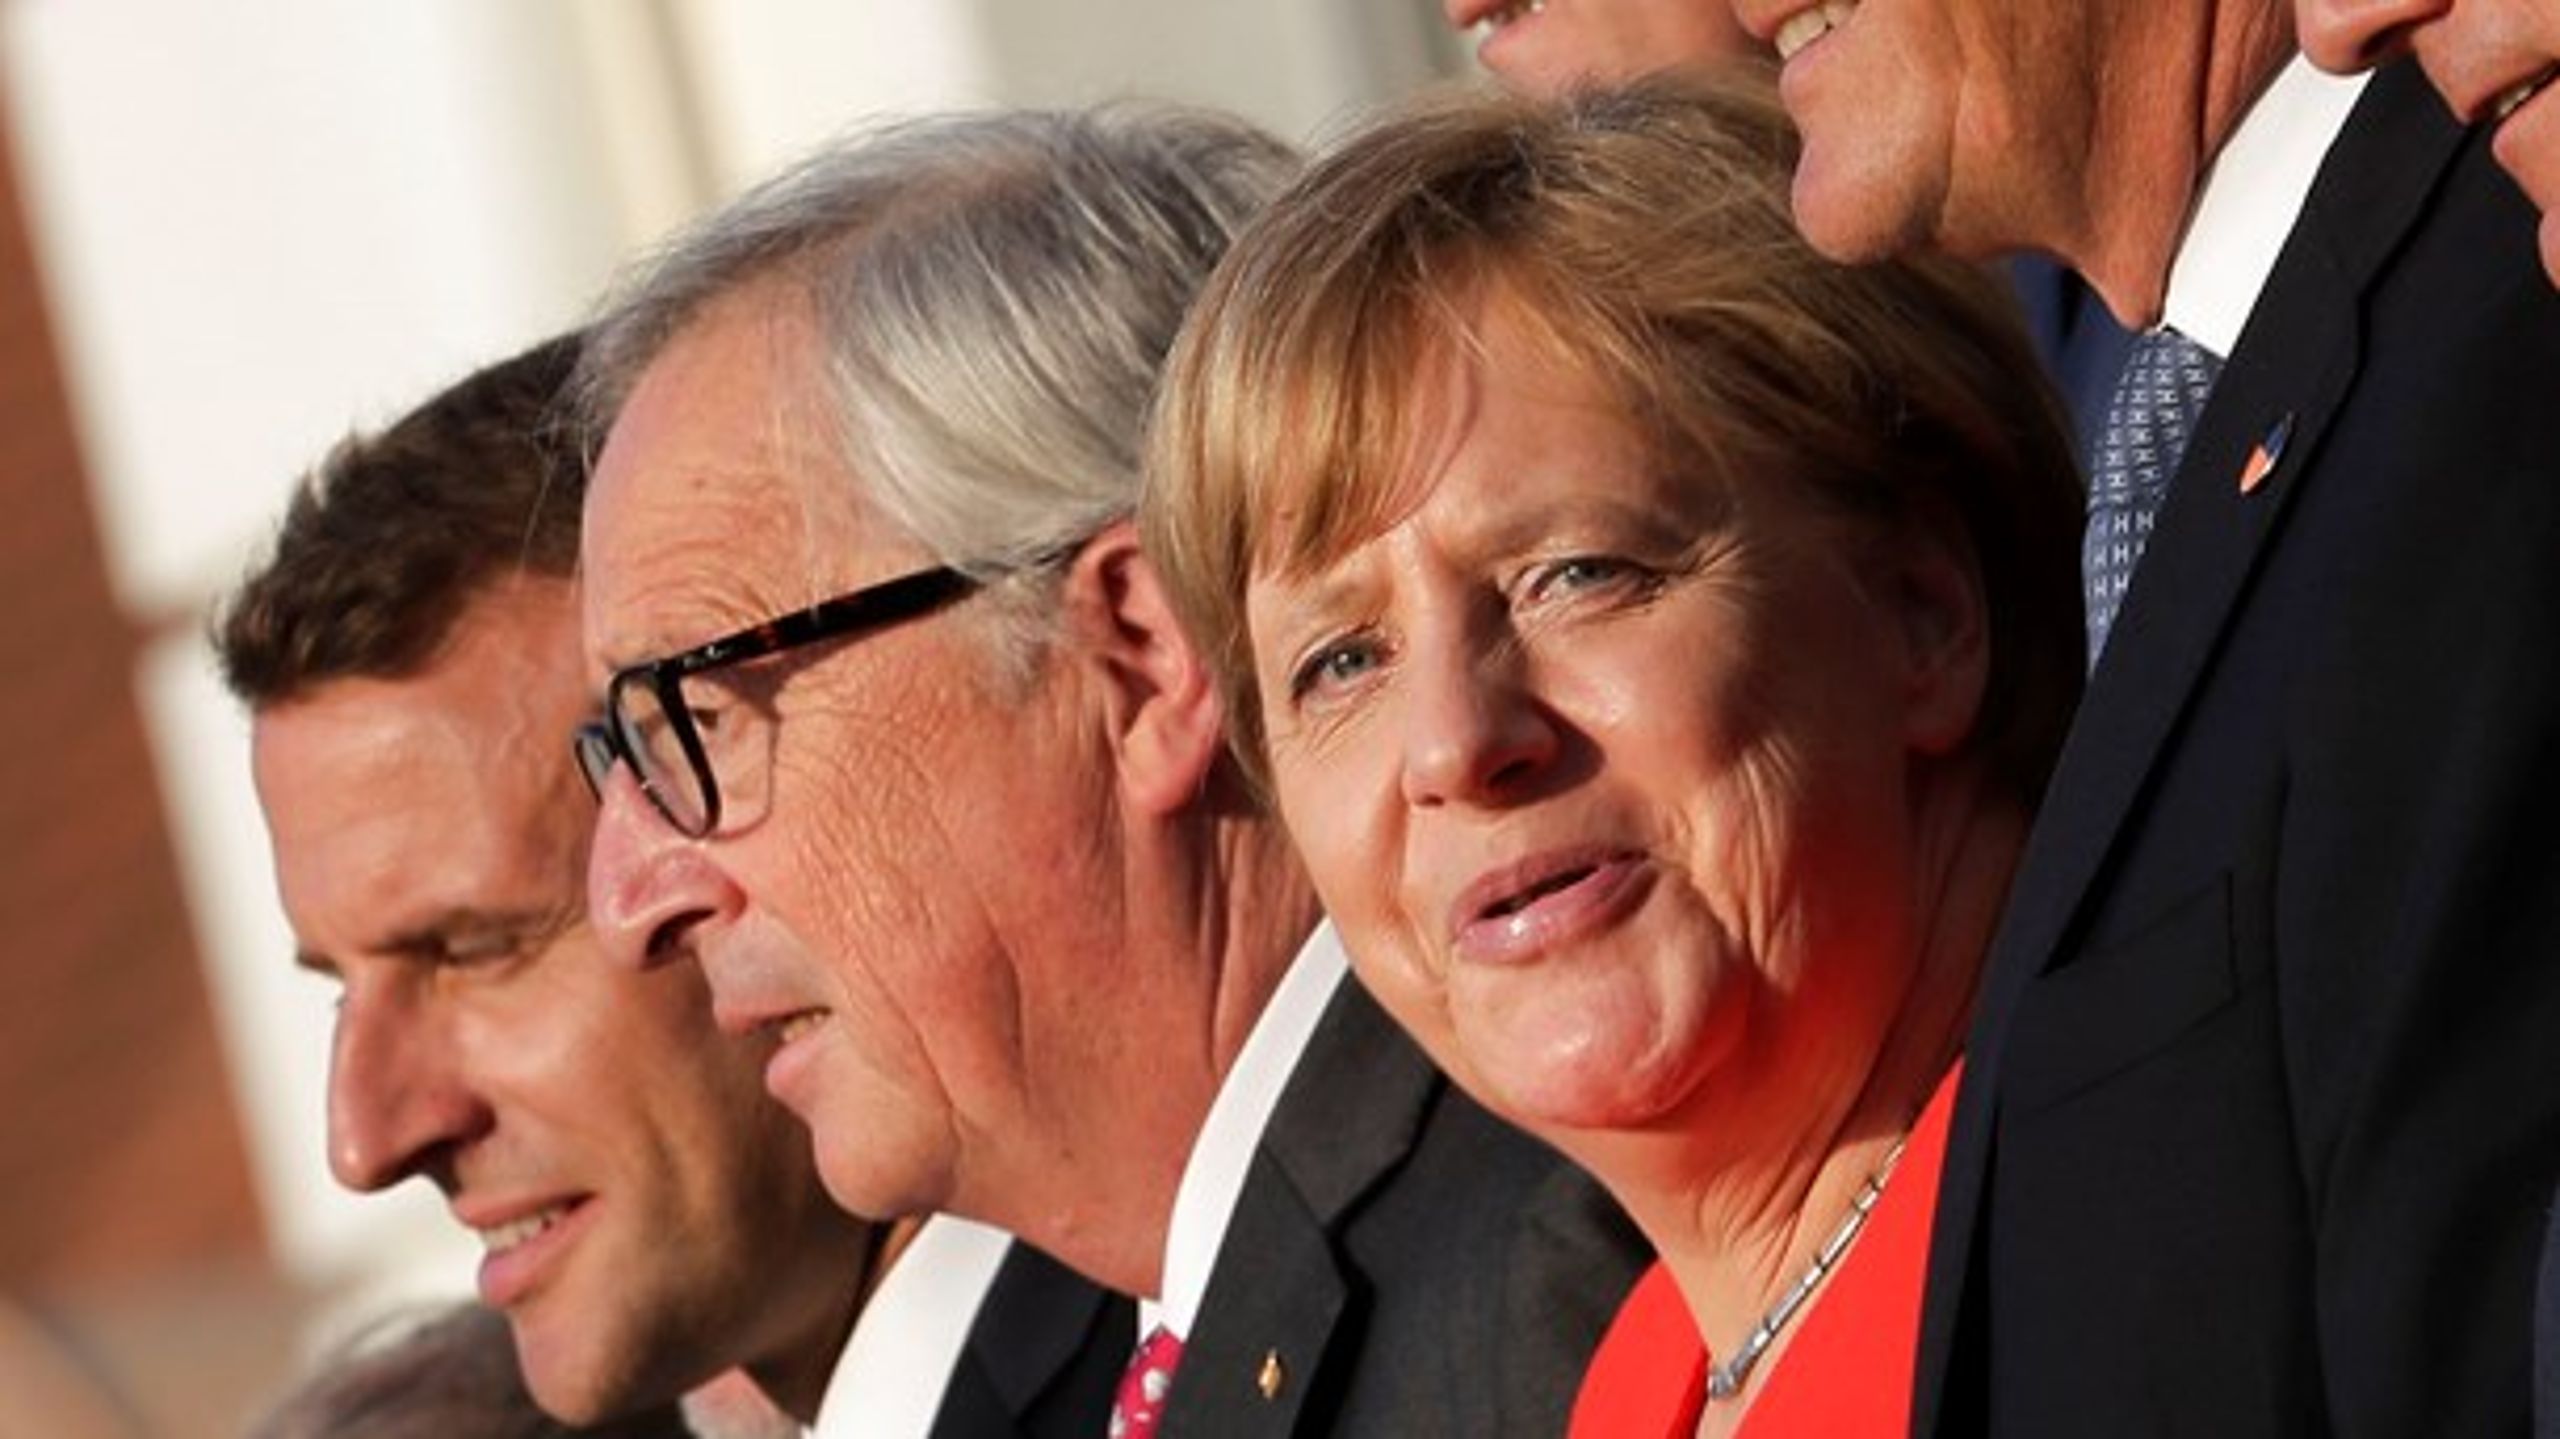 Den tyske kansler, Angela Merkel, har bragt sine hjemlige politiske problemer midt ind på den europæiske politiske scene.